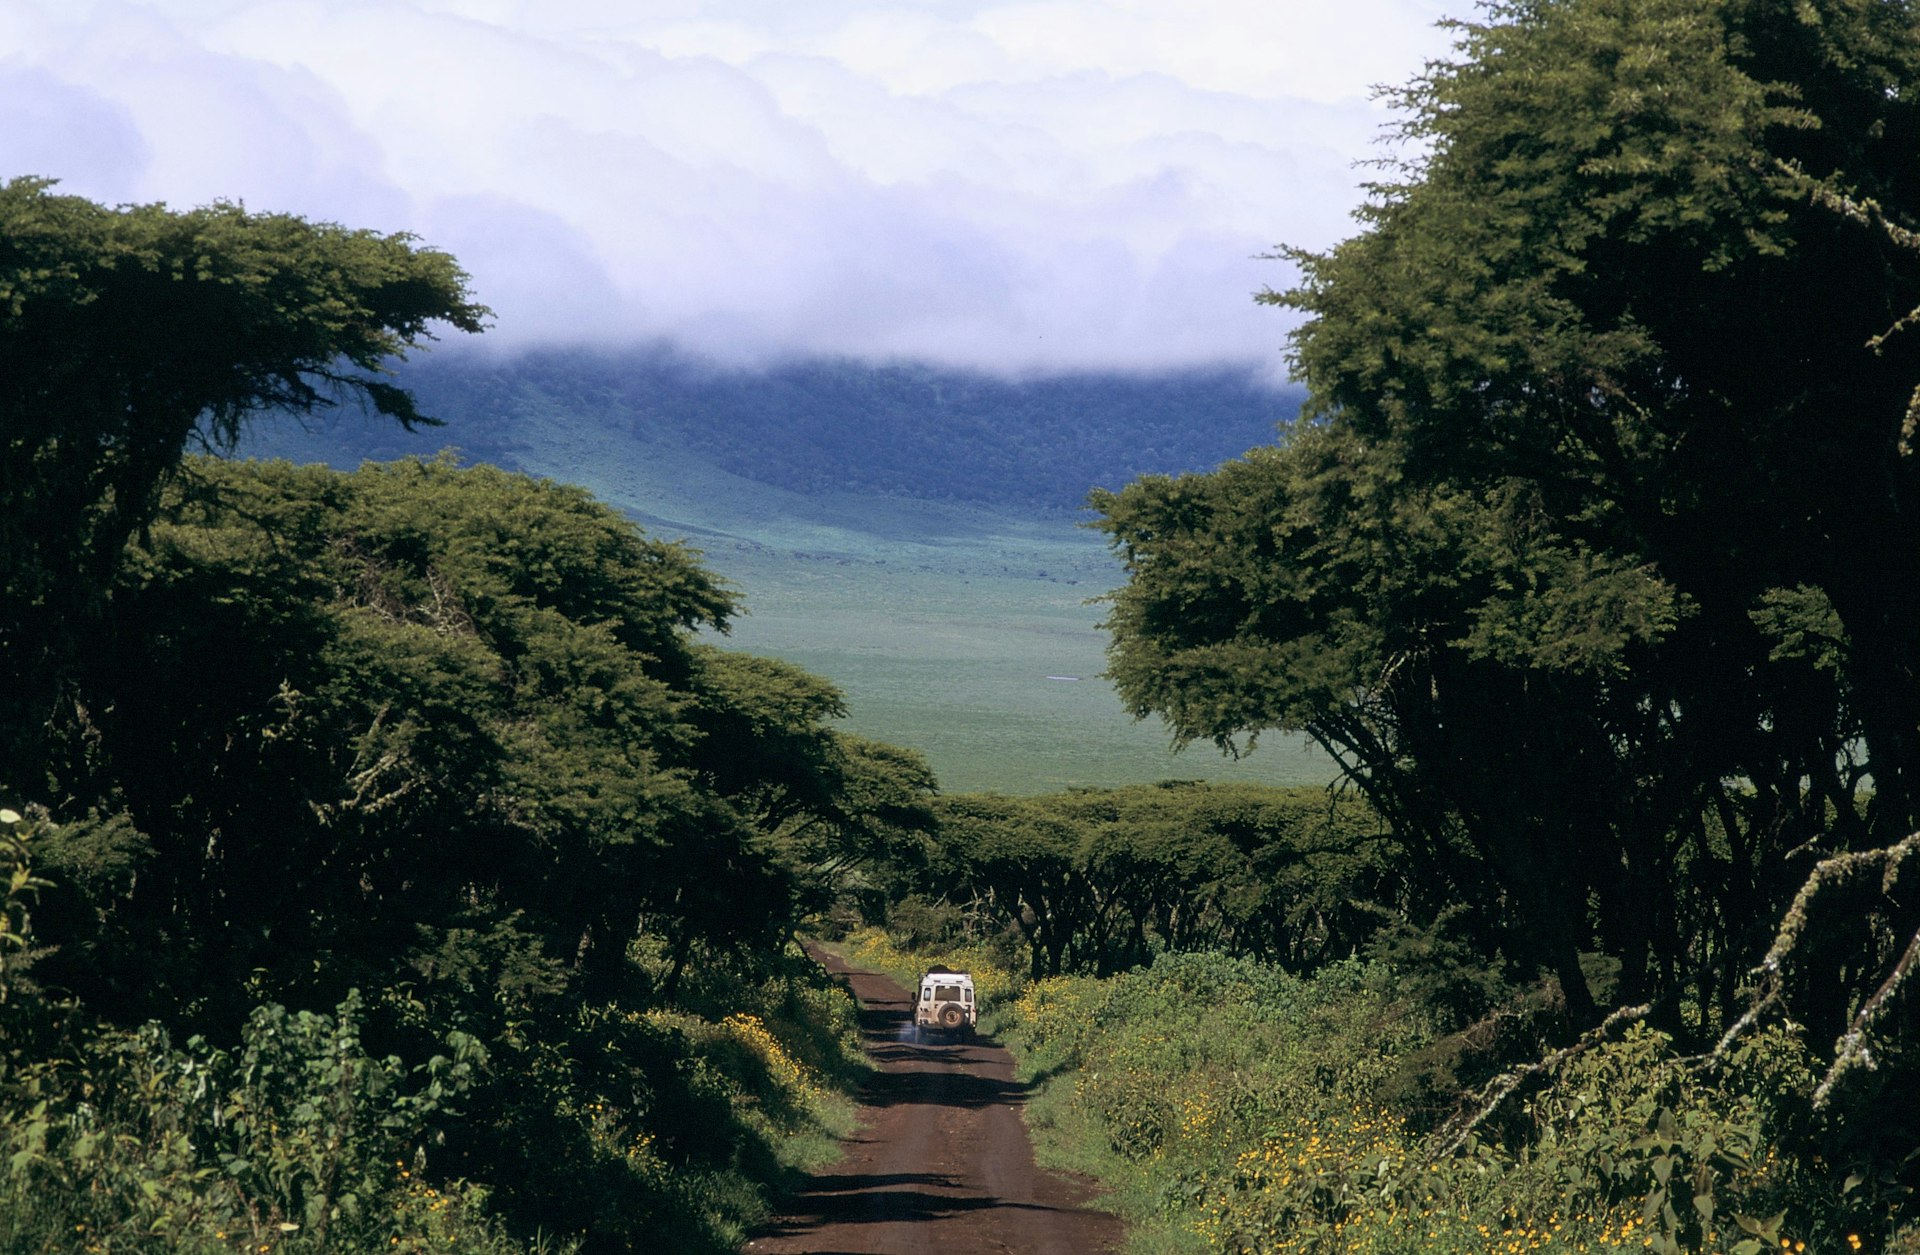 A safari truck winds down a narrow dirt road